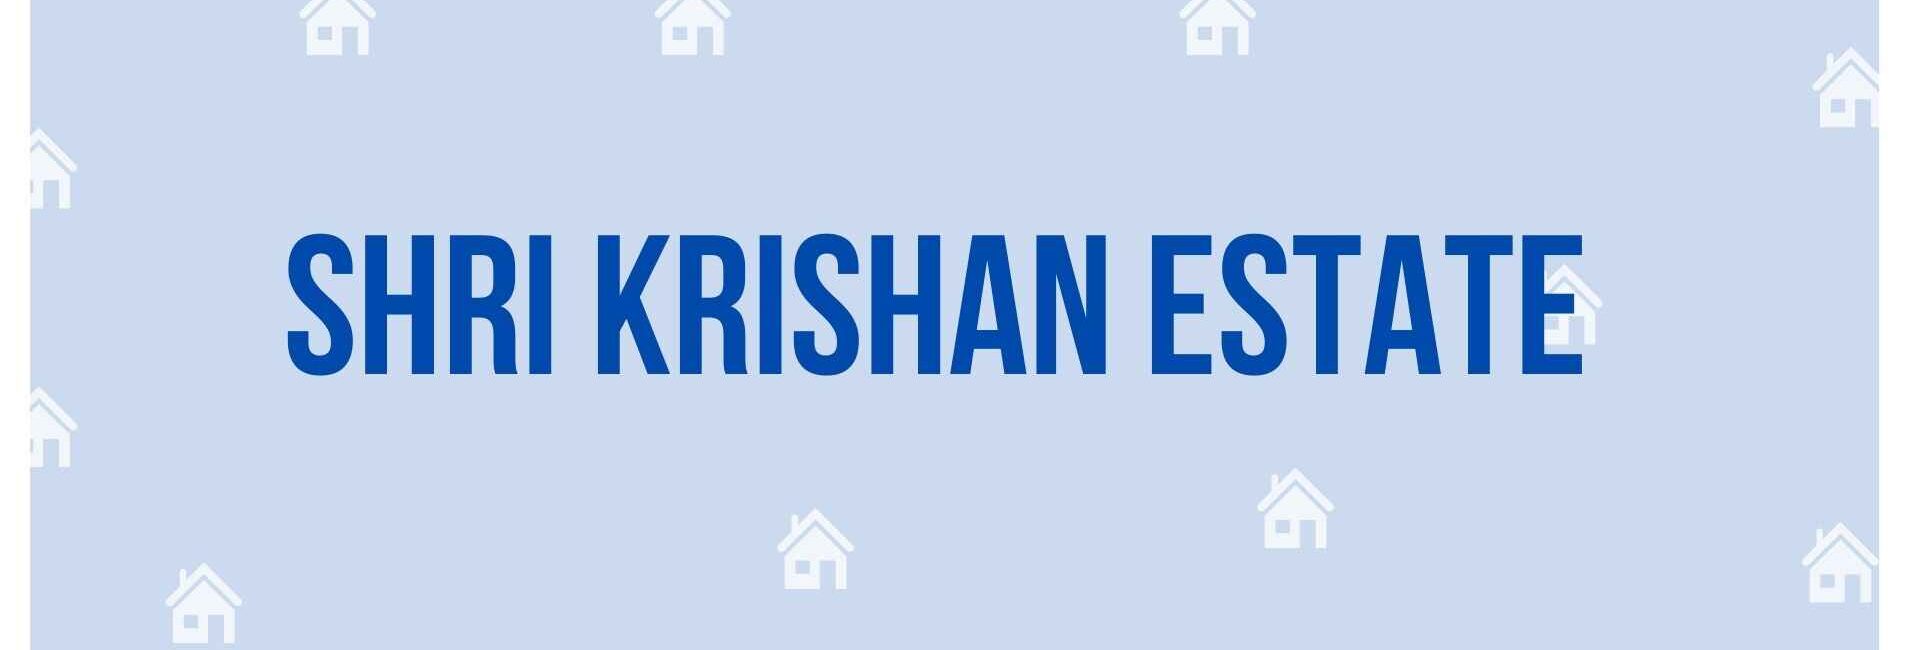 Shri Krishan Estate - Property Dealer in Noida